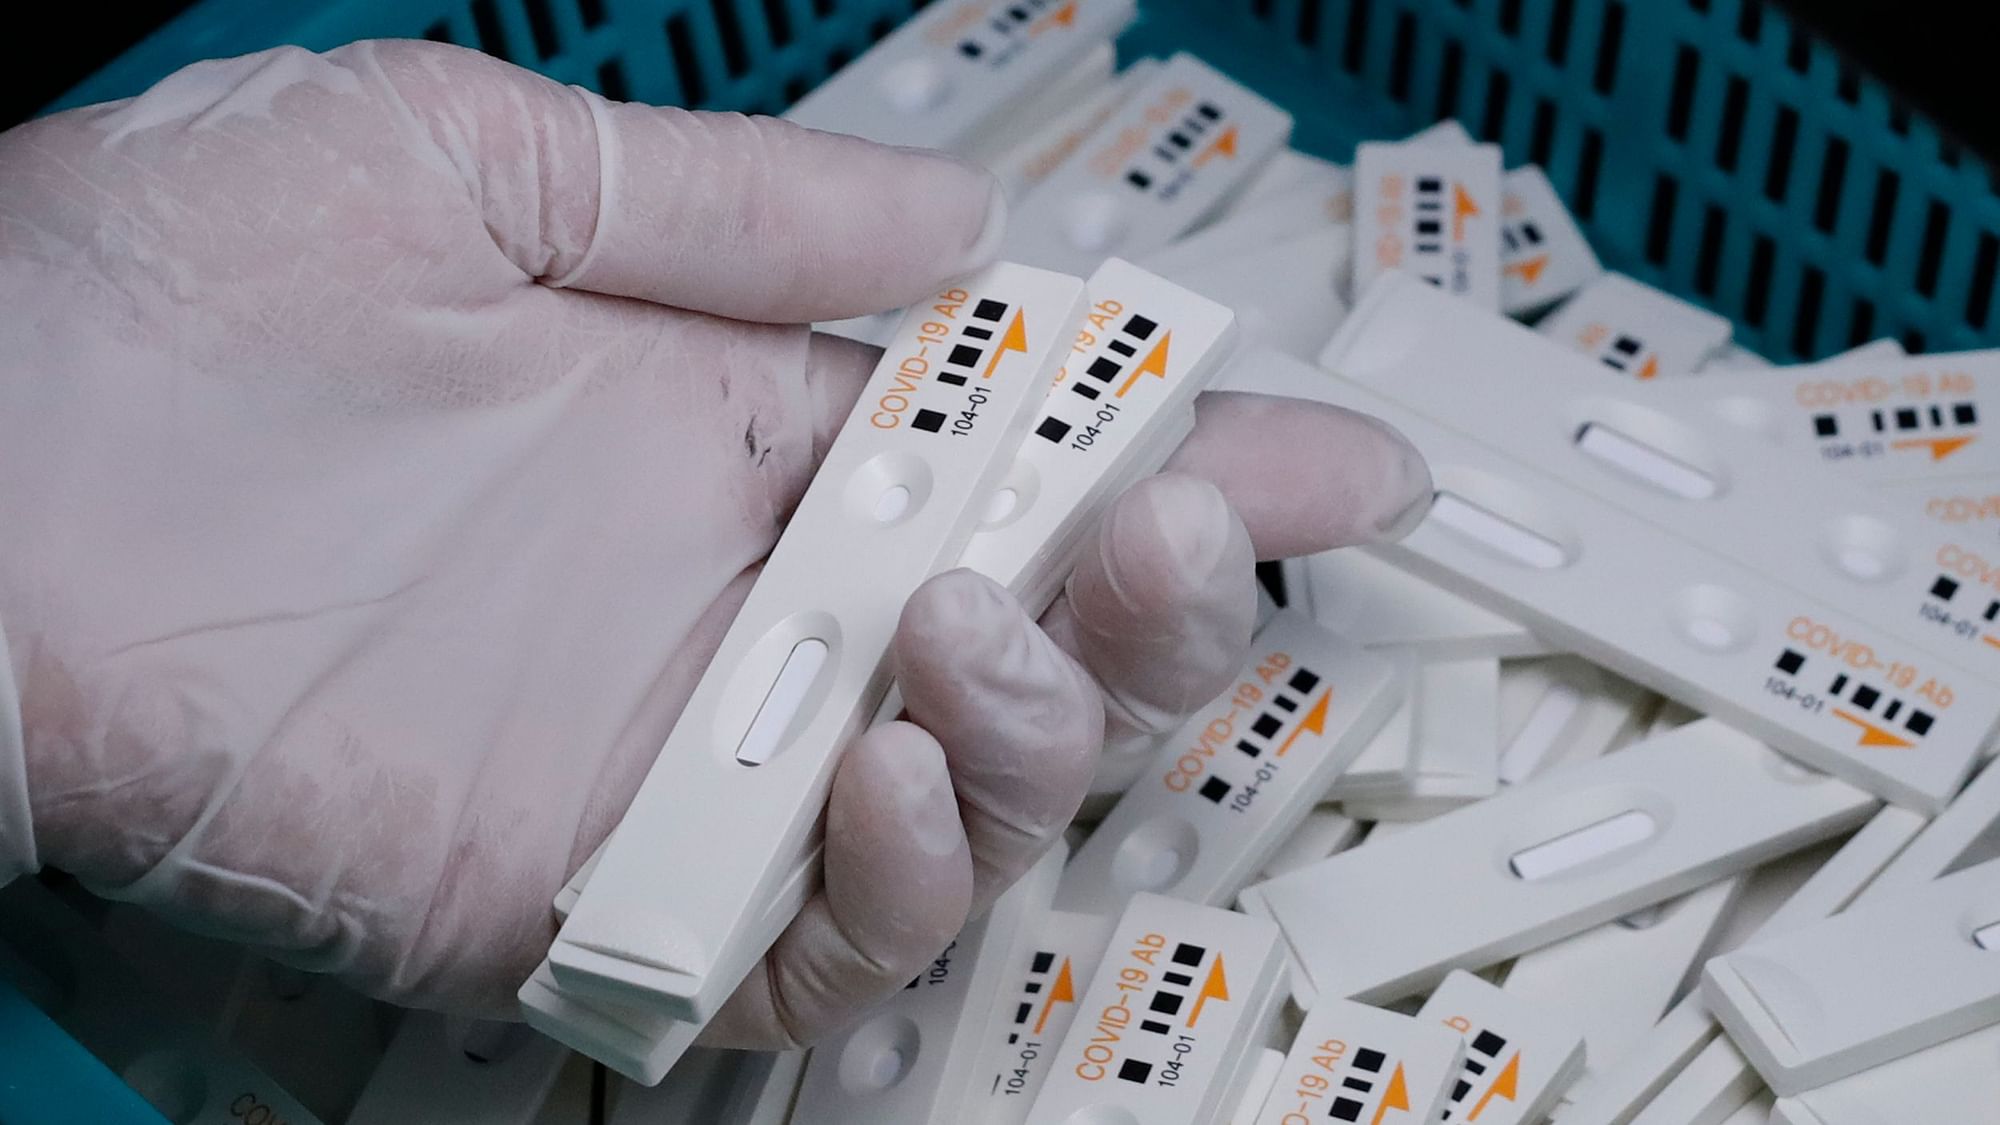 An employee holds antibody test cartridges of the ichroma COVID-19 Ab testing kit used in diagnosing coronavirus